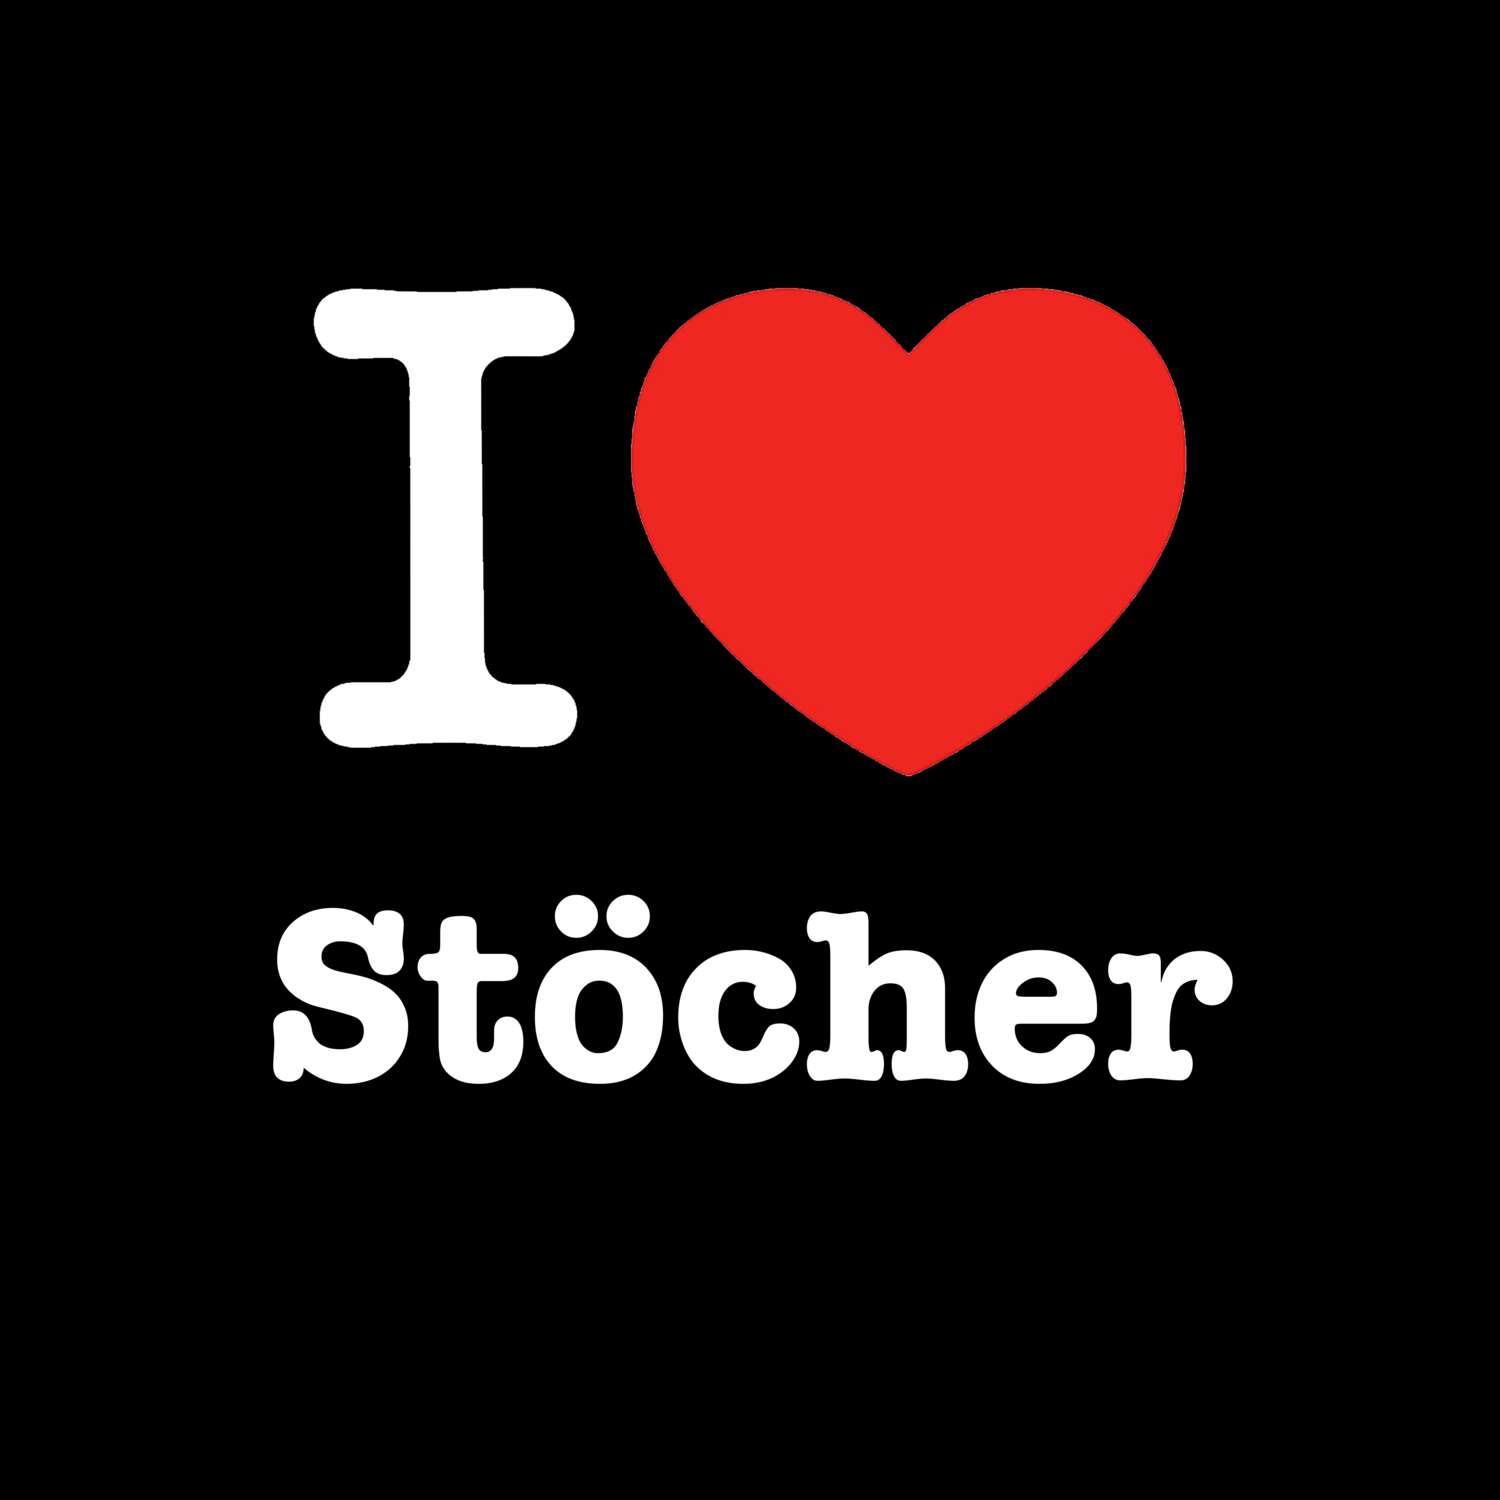 Stöcher T-Shirt »I love«